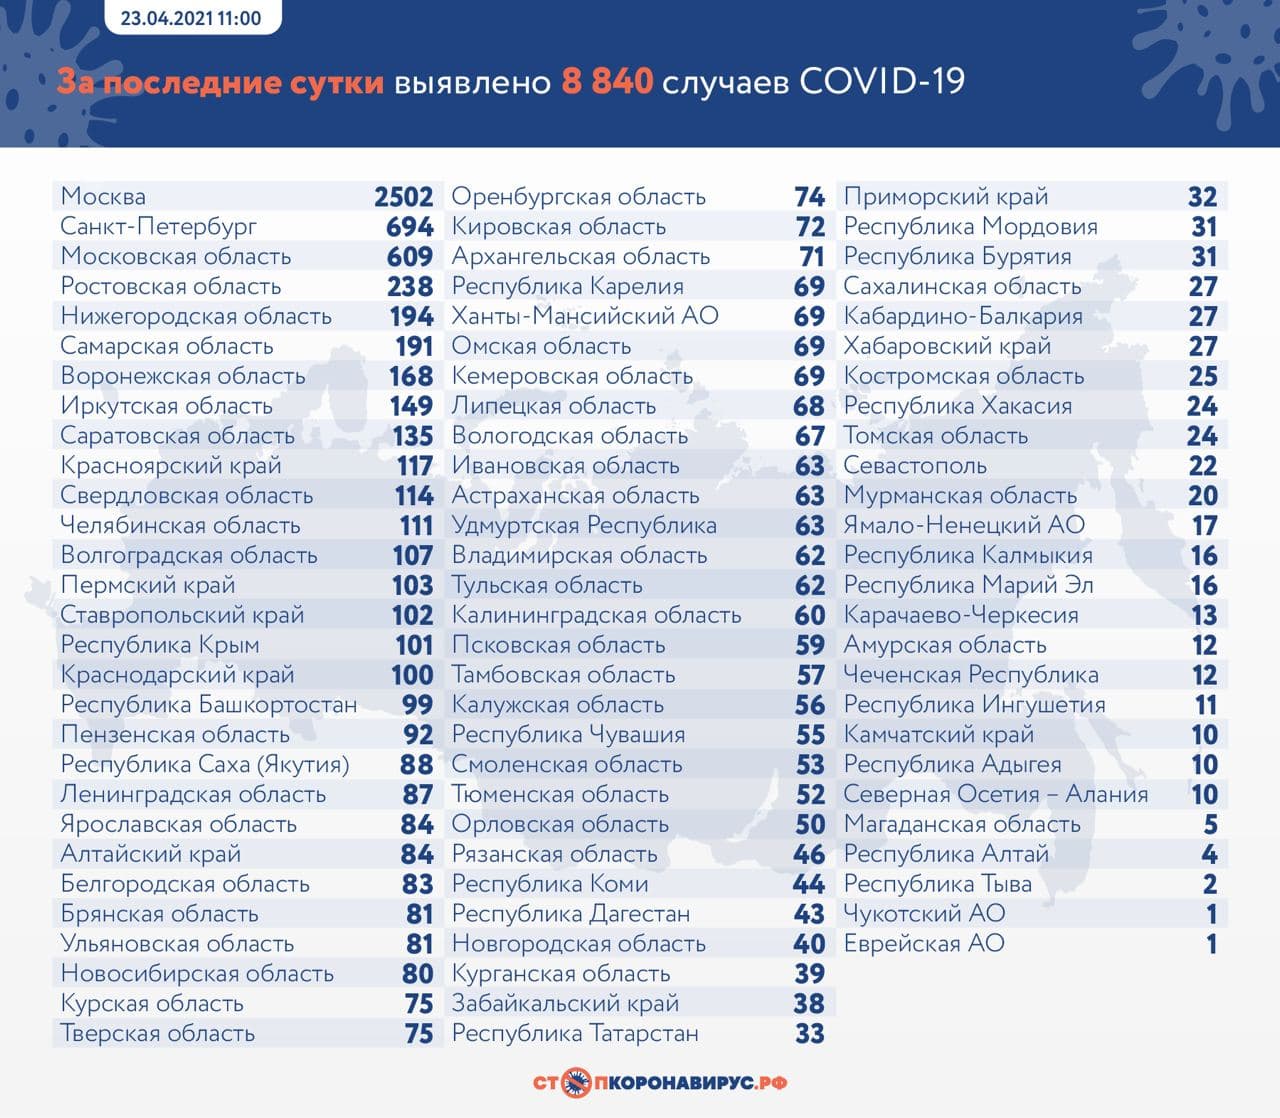 Оперативная статистика по коронавирусу в России на 23 апреля